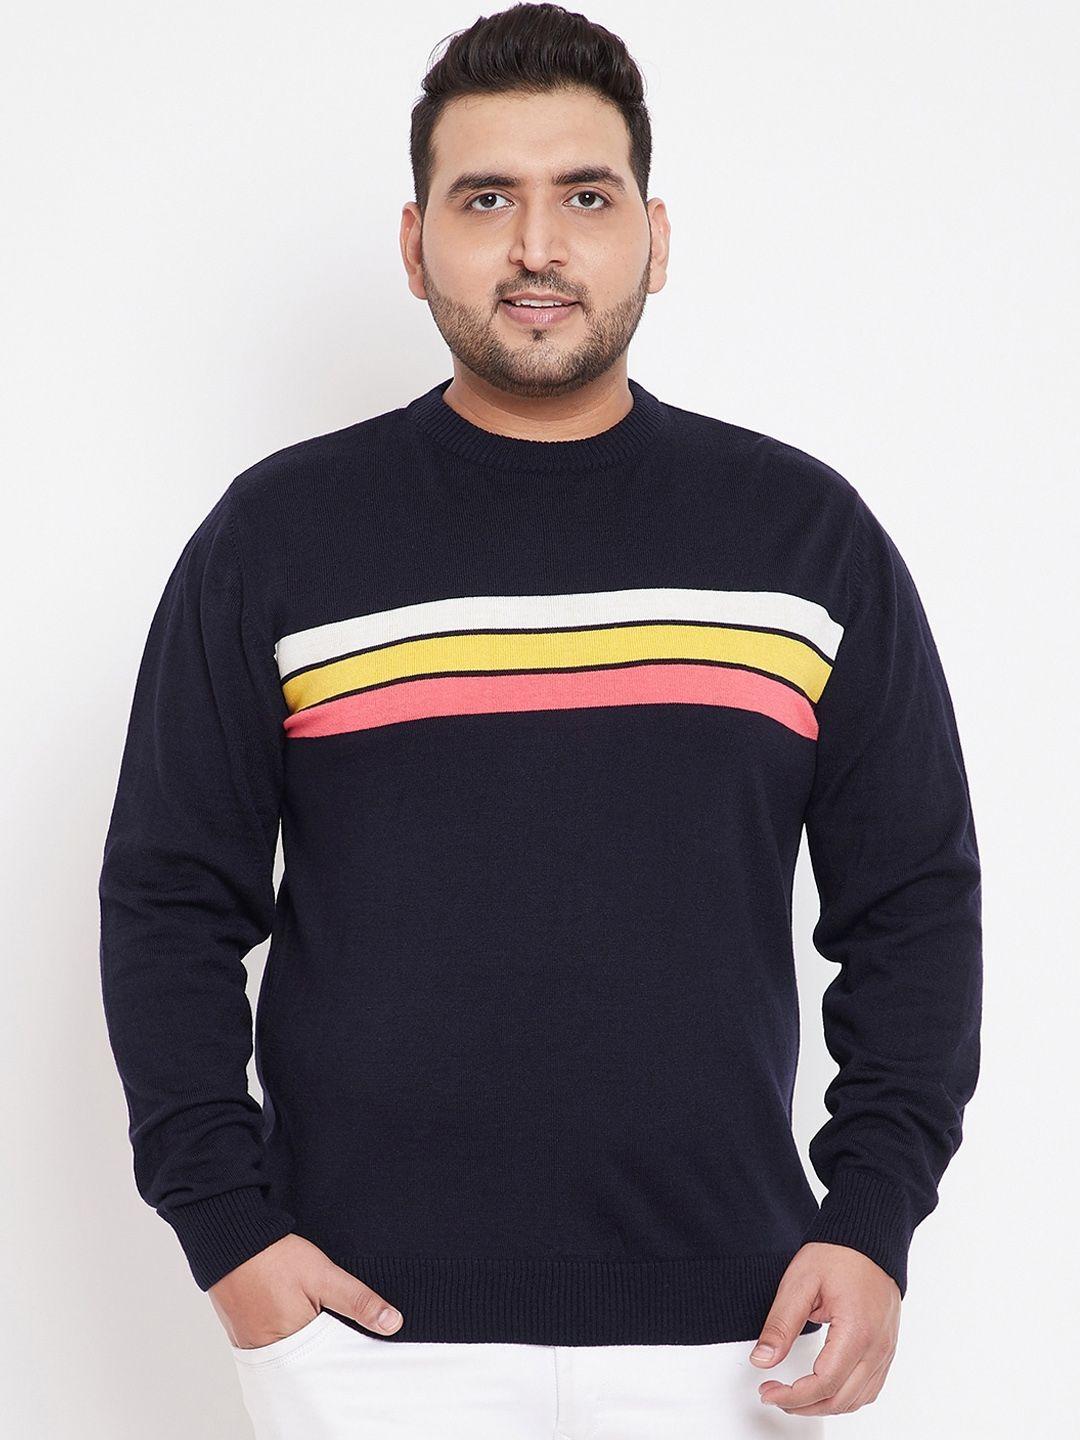 bigbanana men navy blue & yellow striped pullover sweater